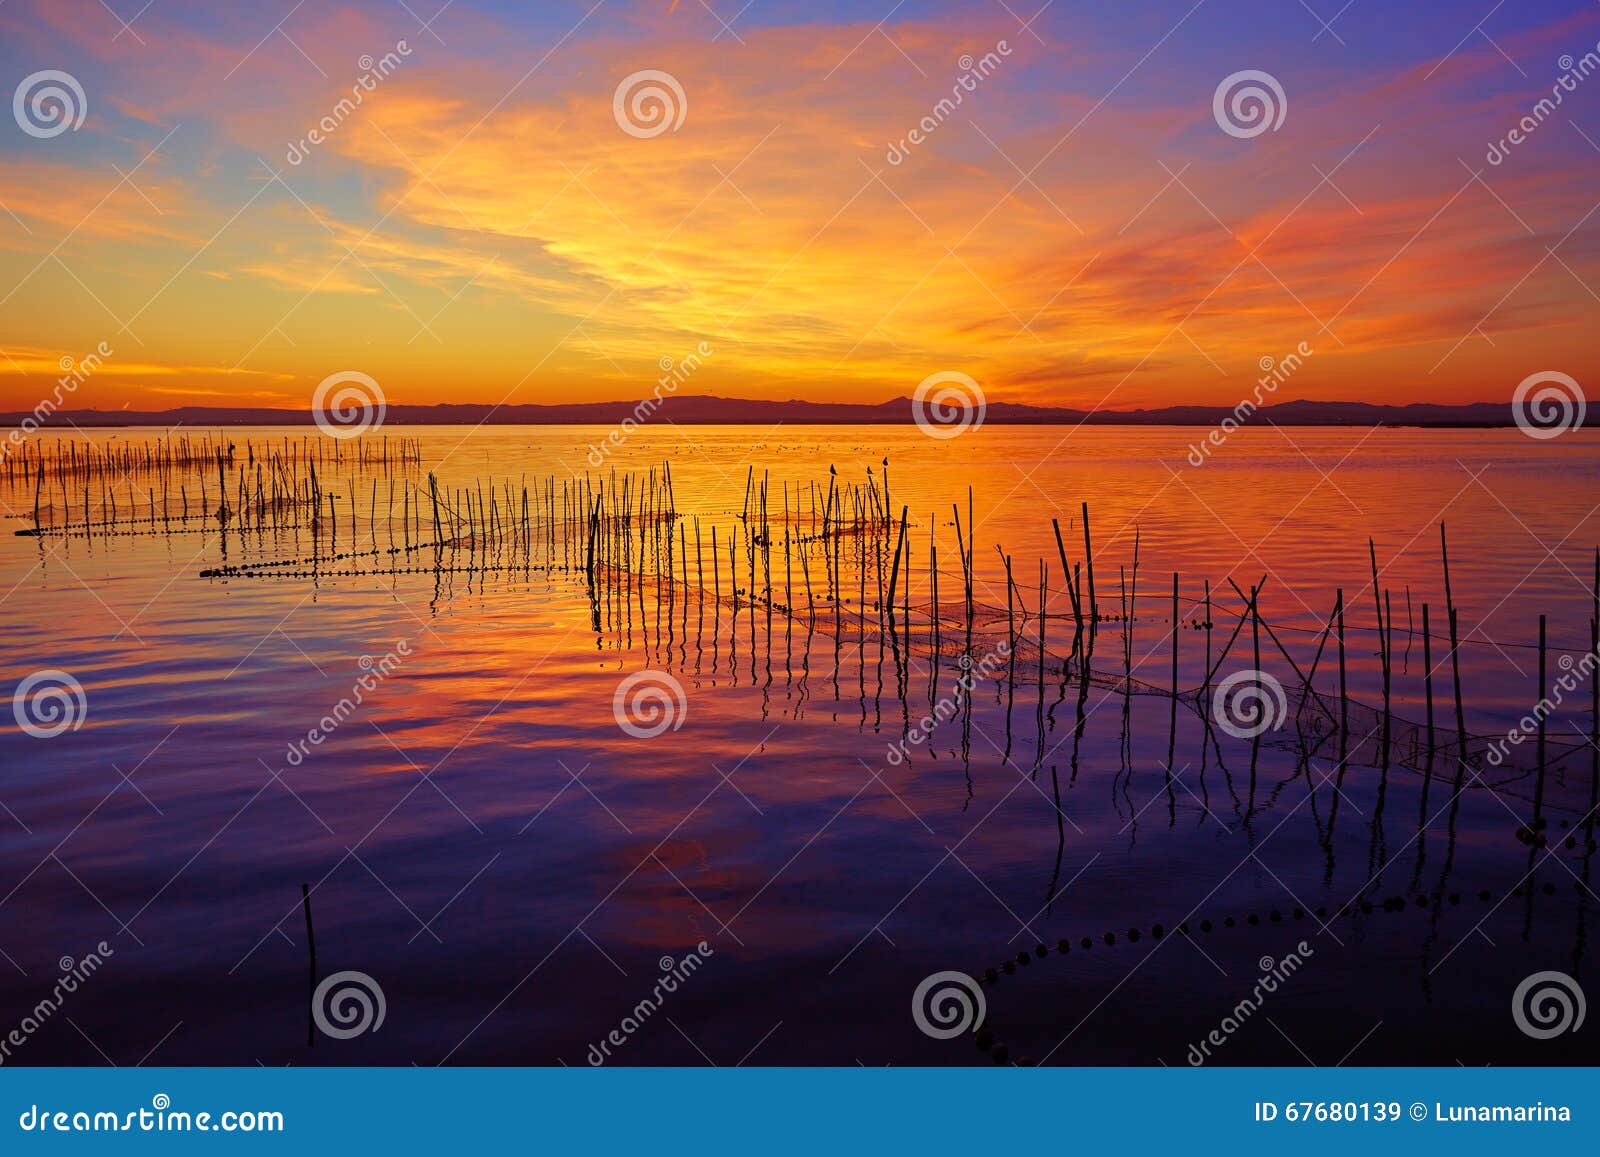 la albufera lake sunset in el saler of valencia